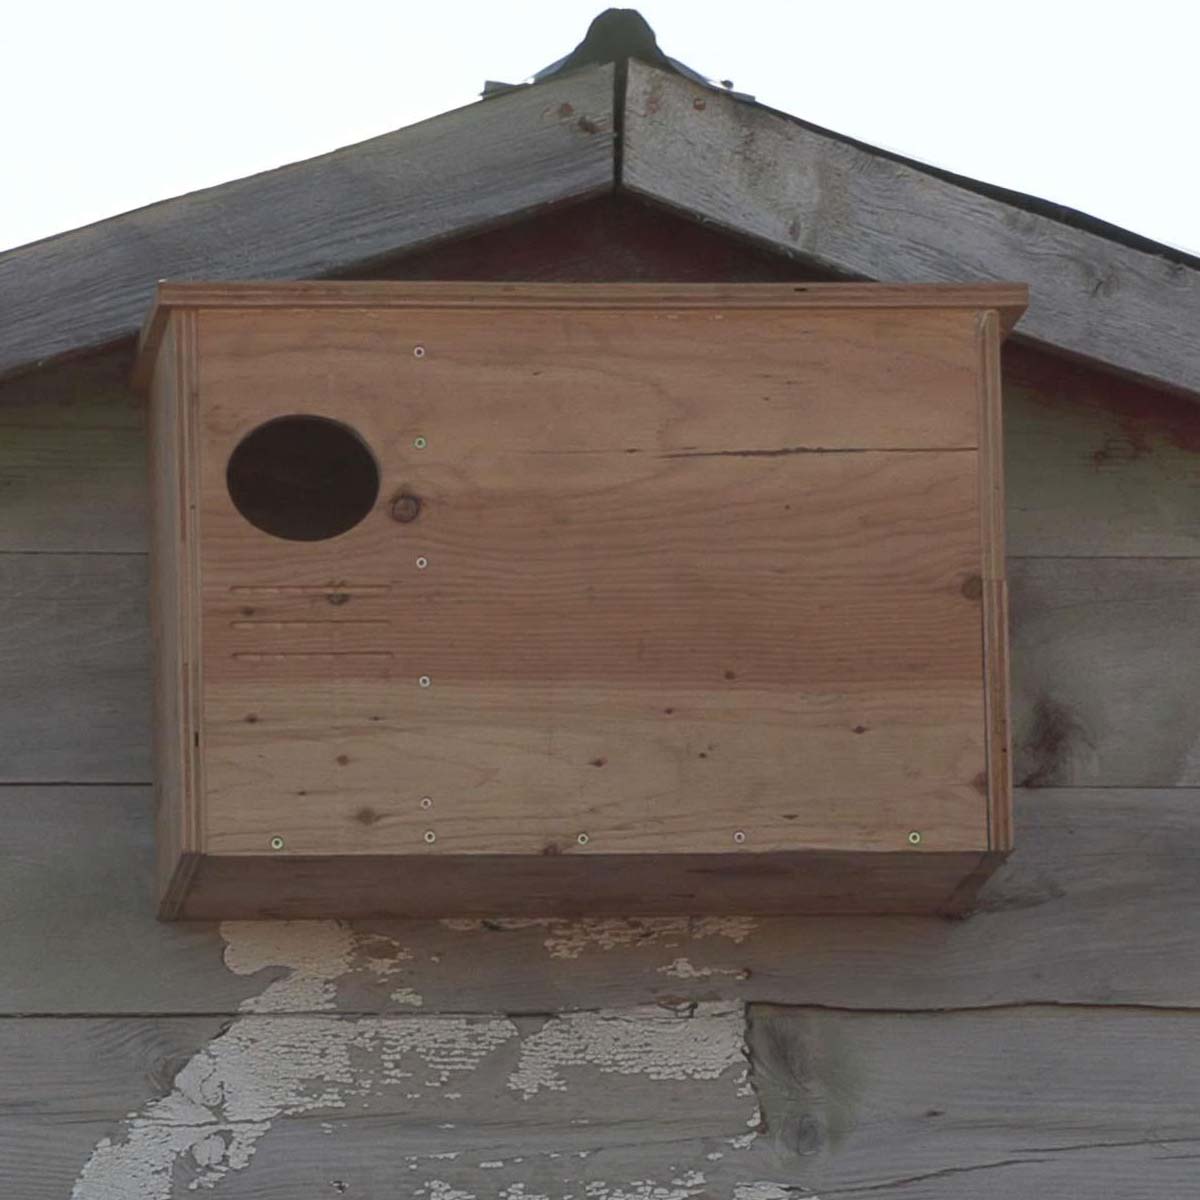 barn owl box set on a side of a barn